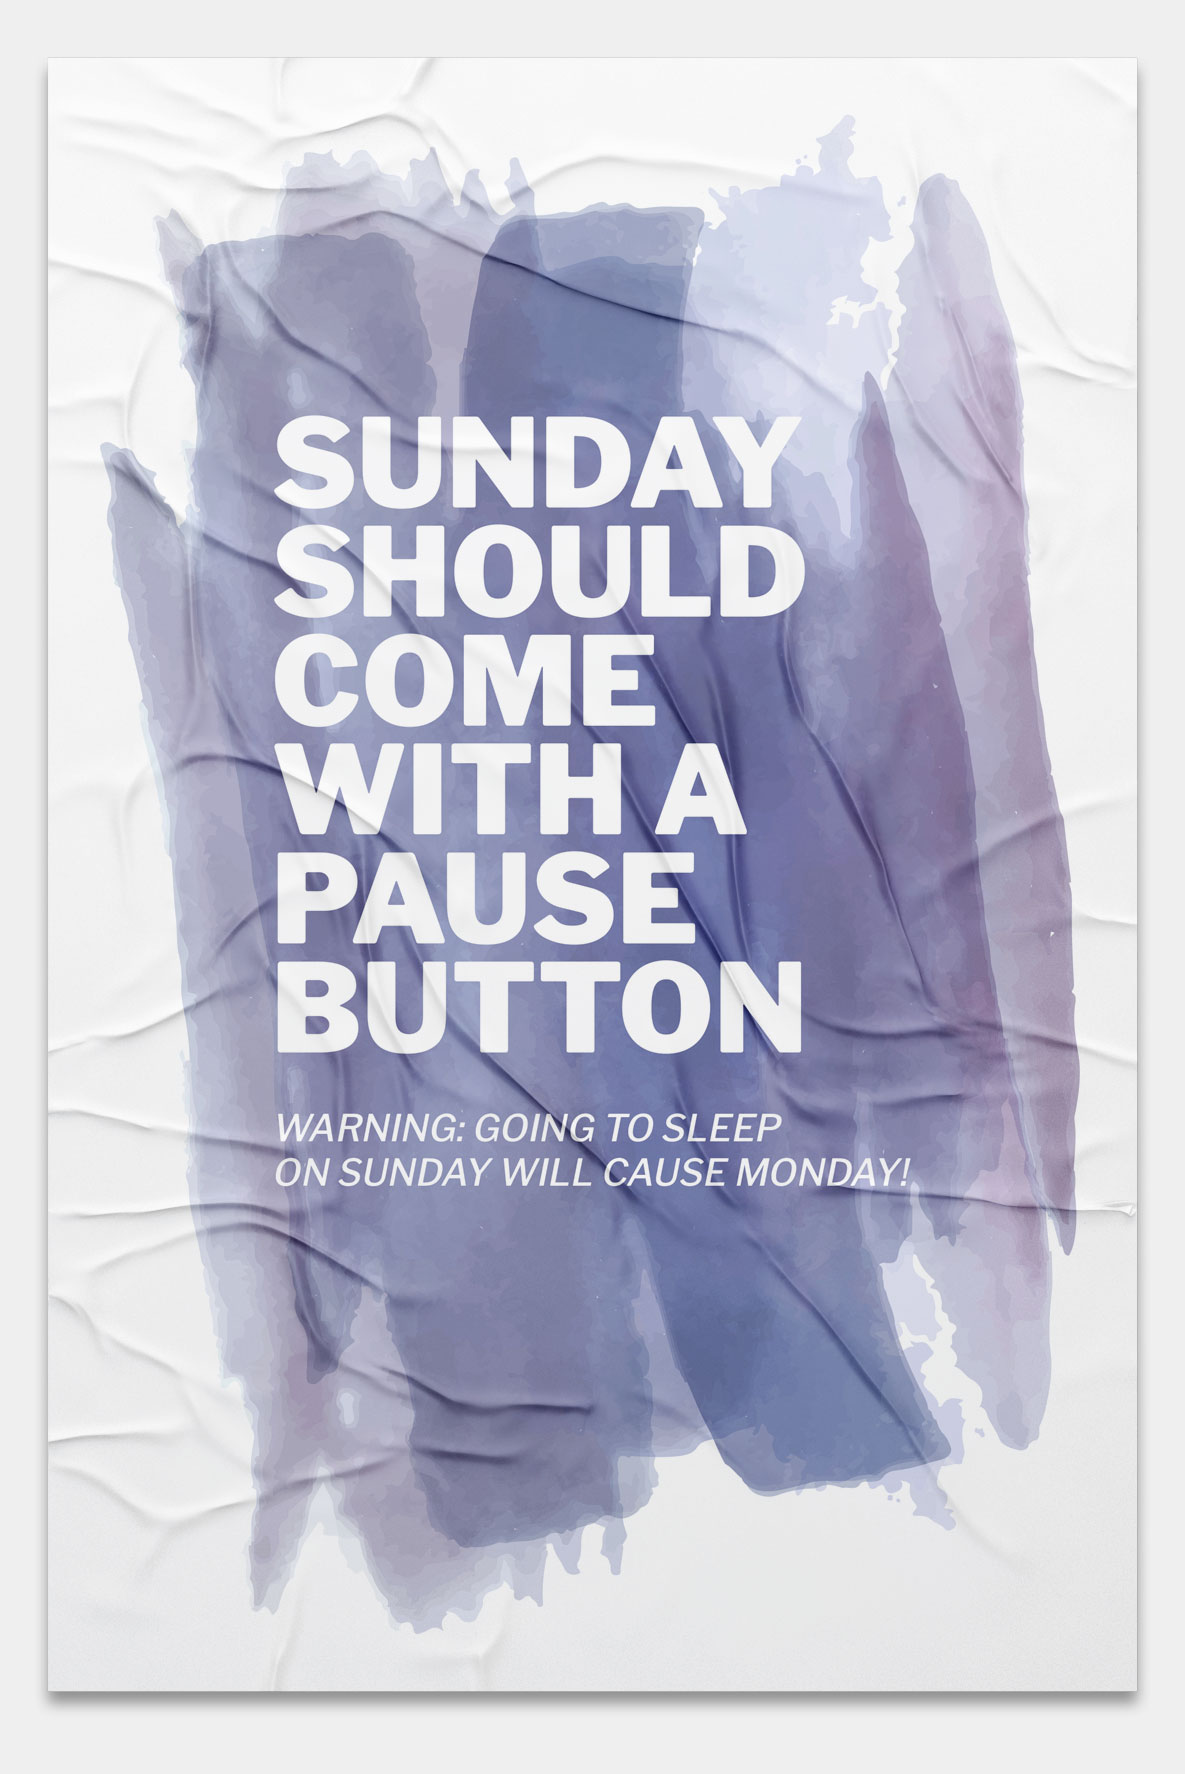 Sunday Poster